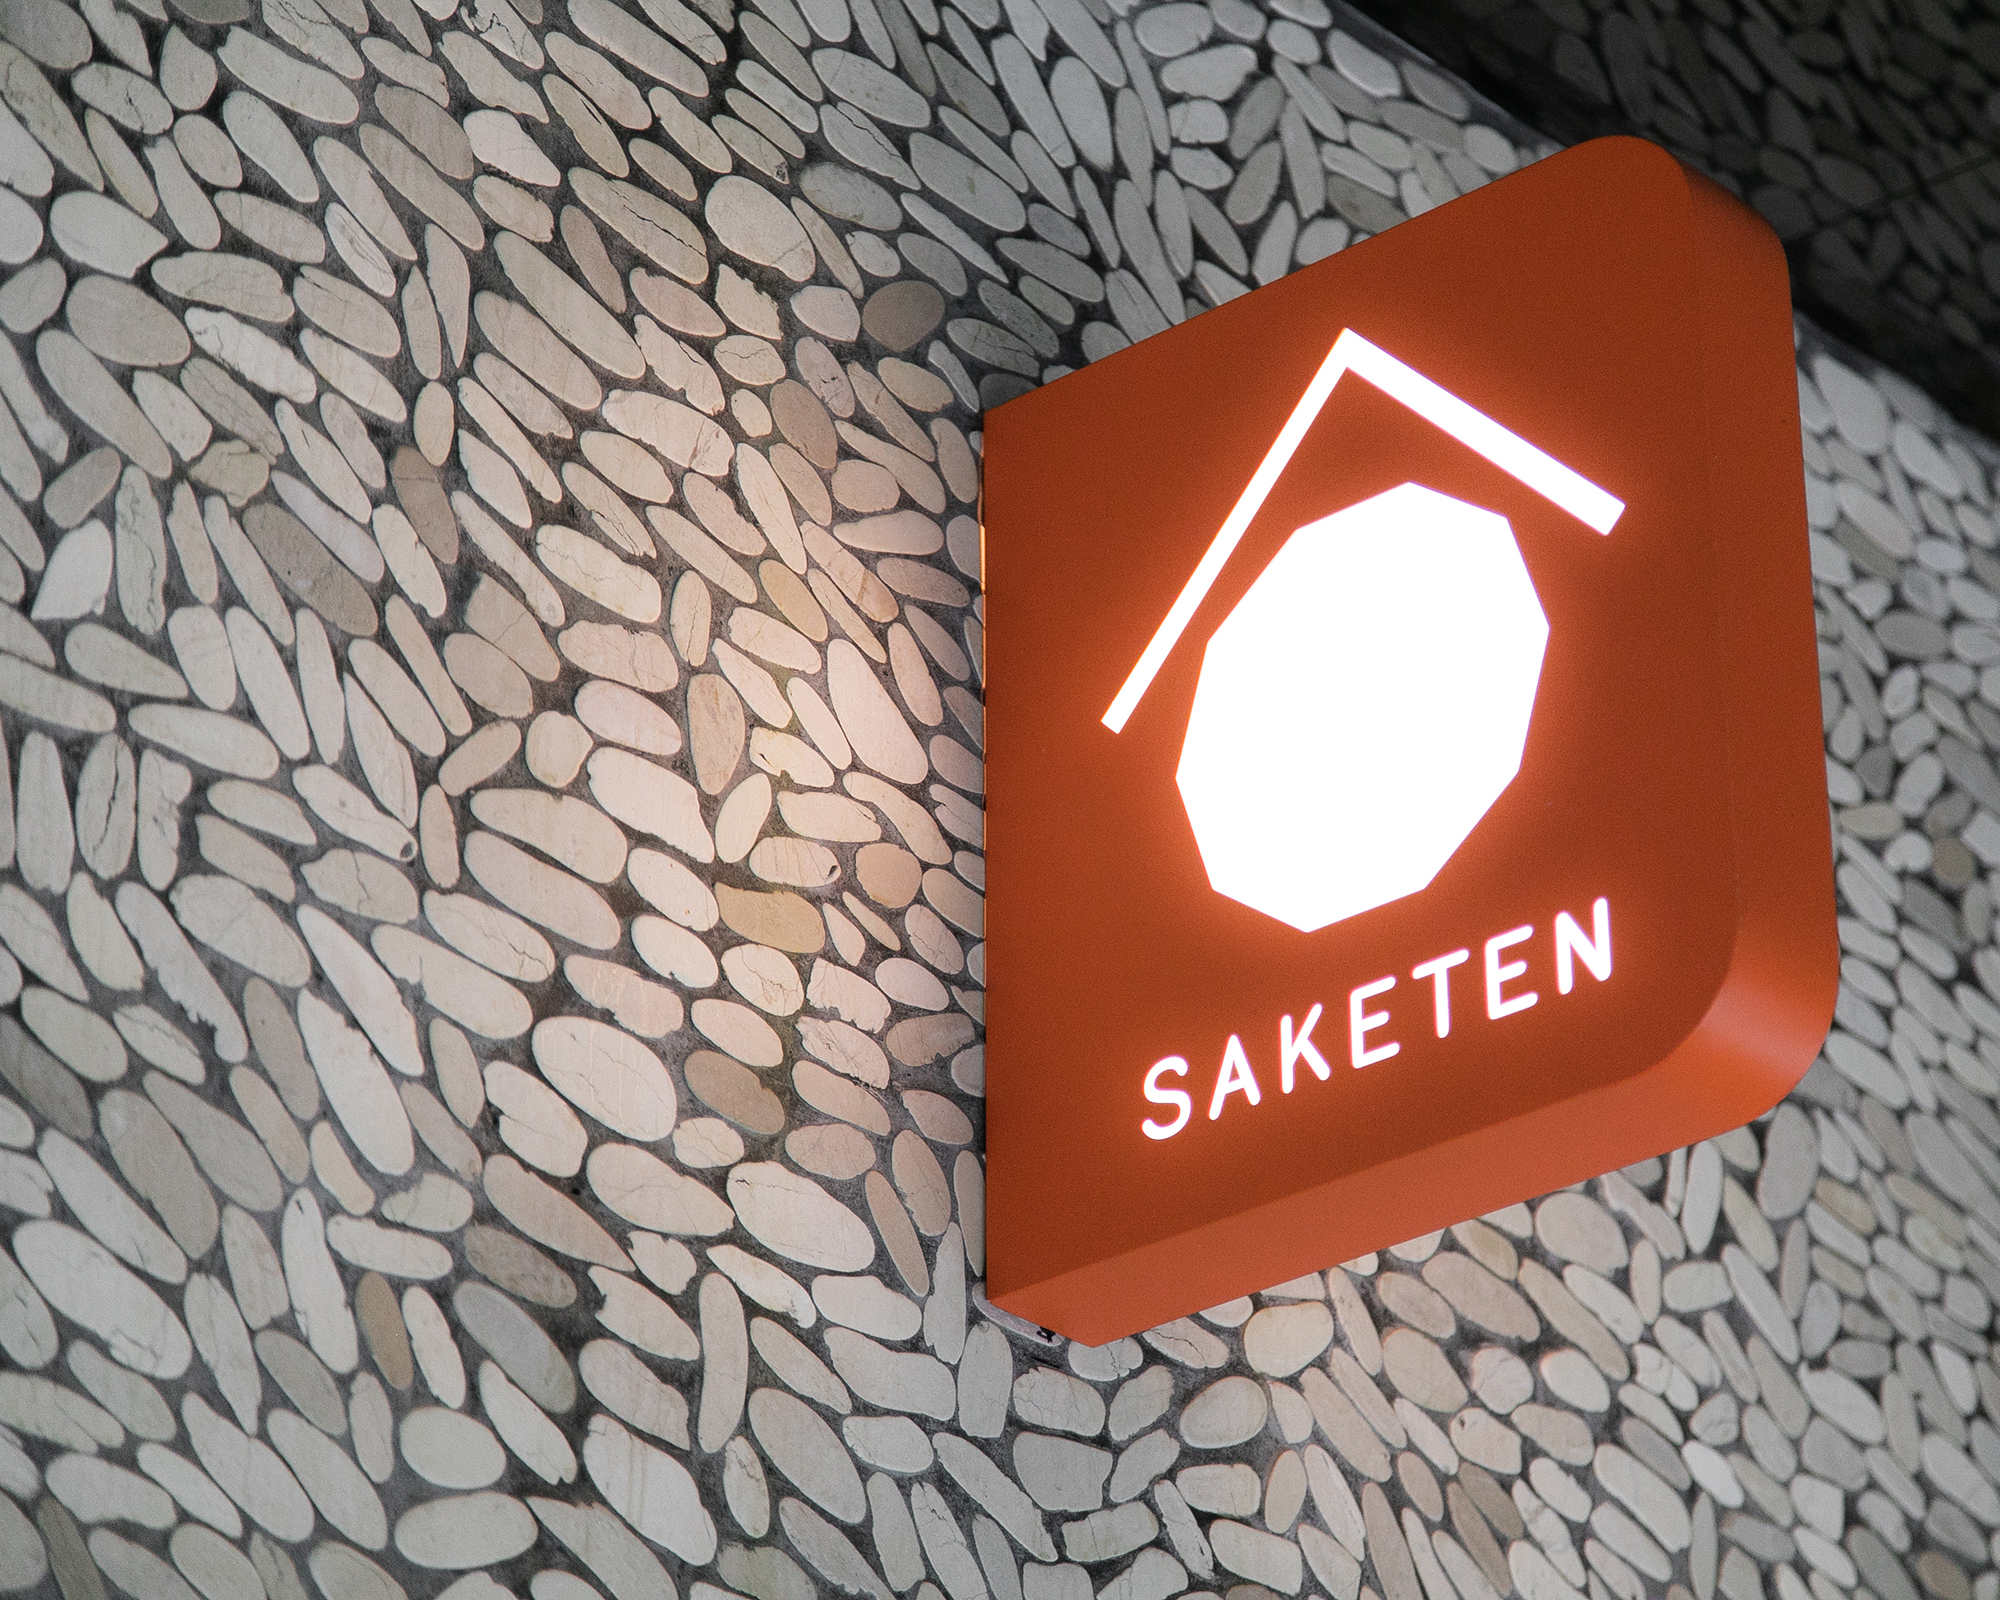 Saketen_HK_Interior Architecture and Design by Sean Dix